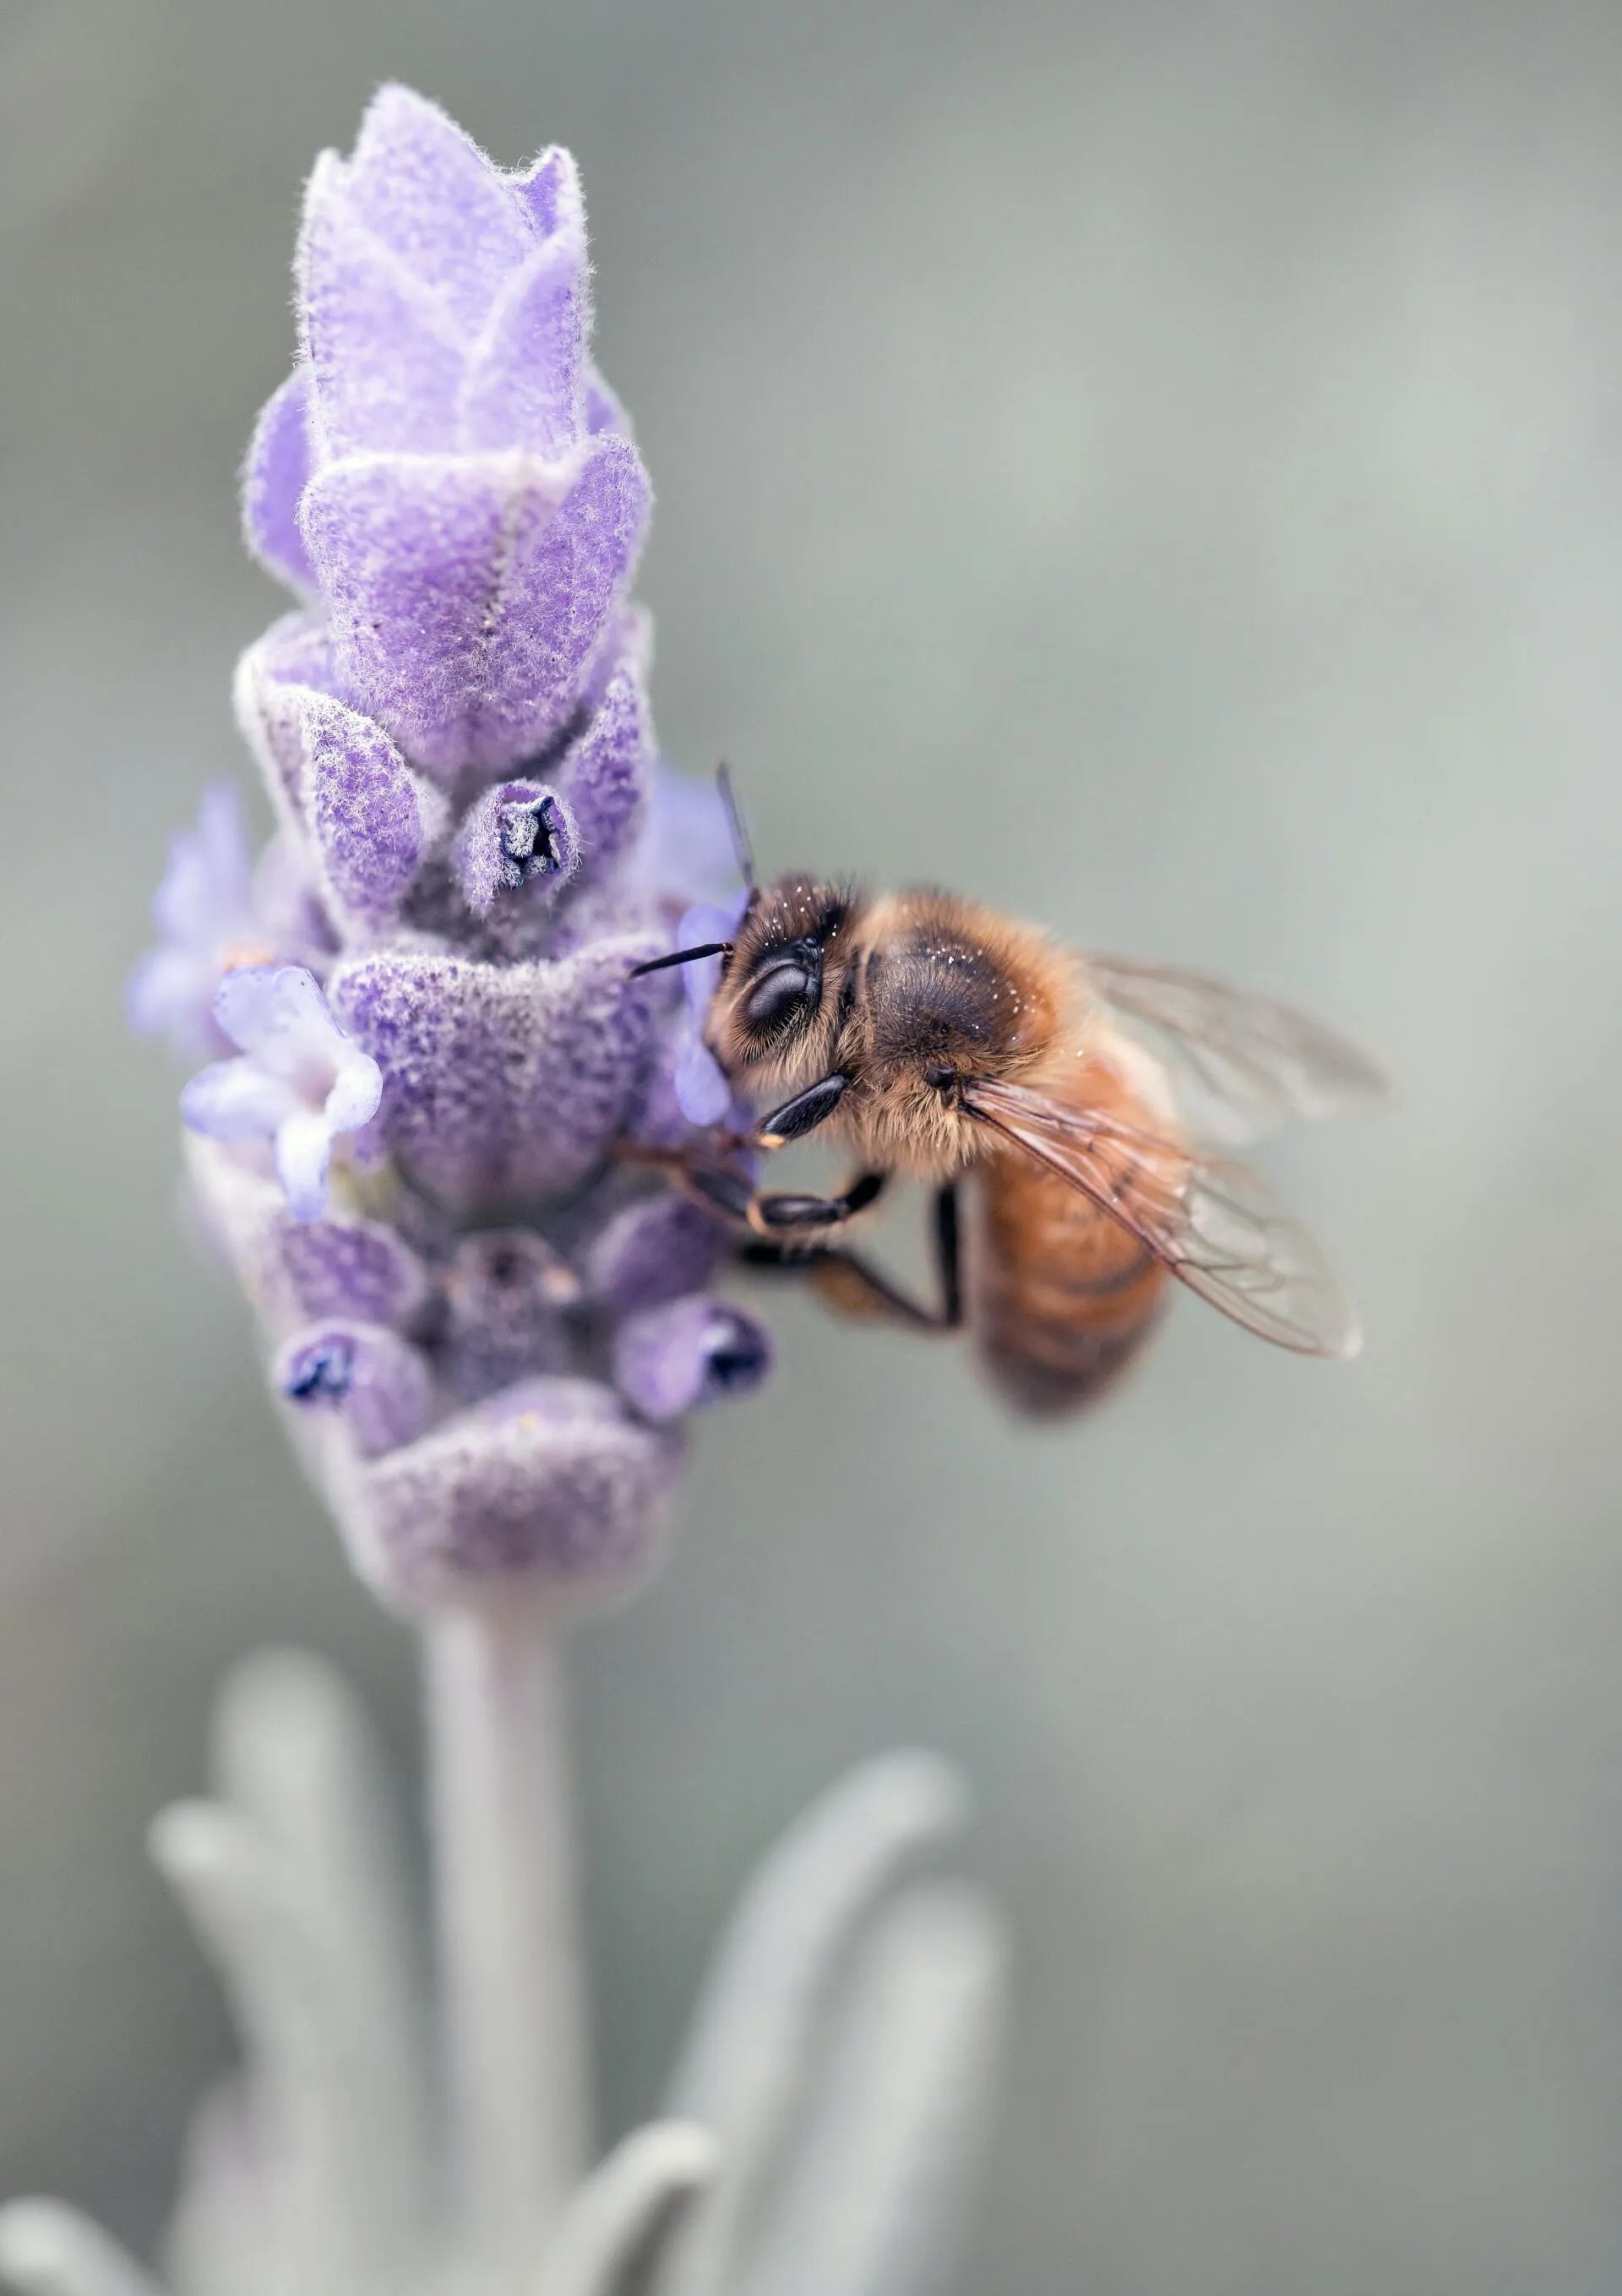 david clodes image of a bee on lavendar class=